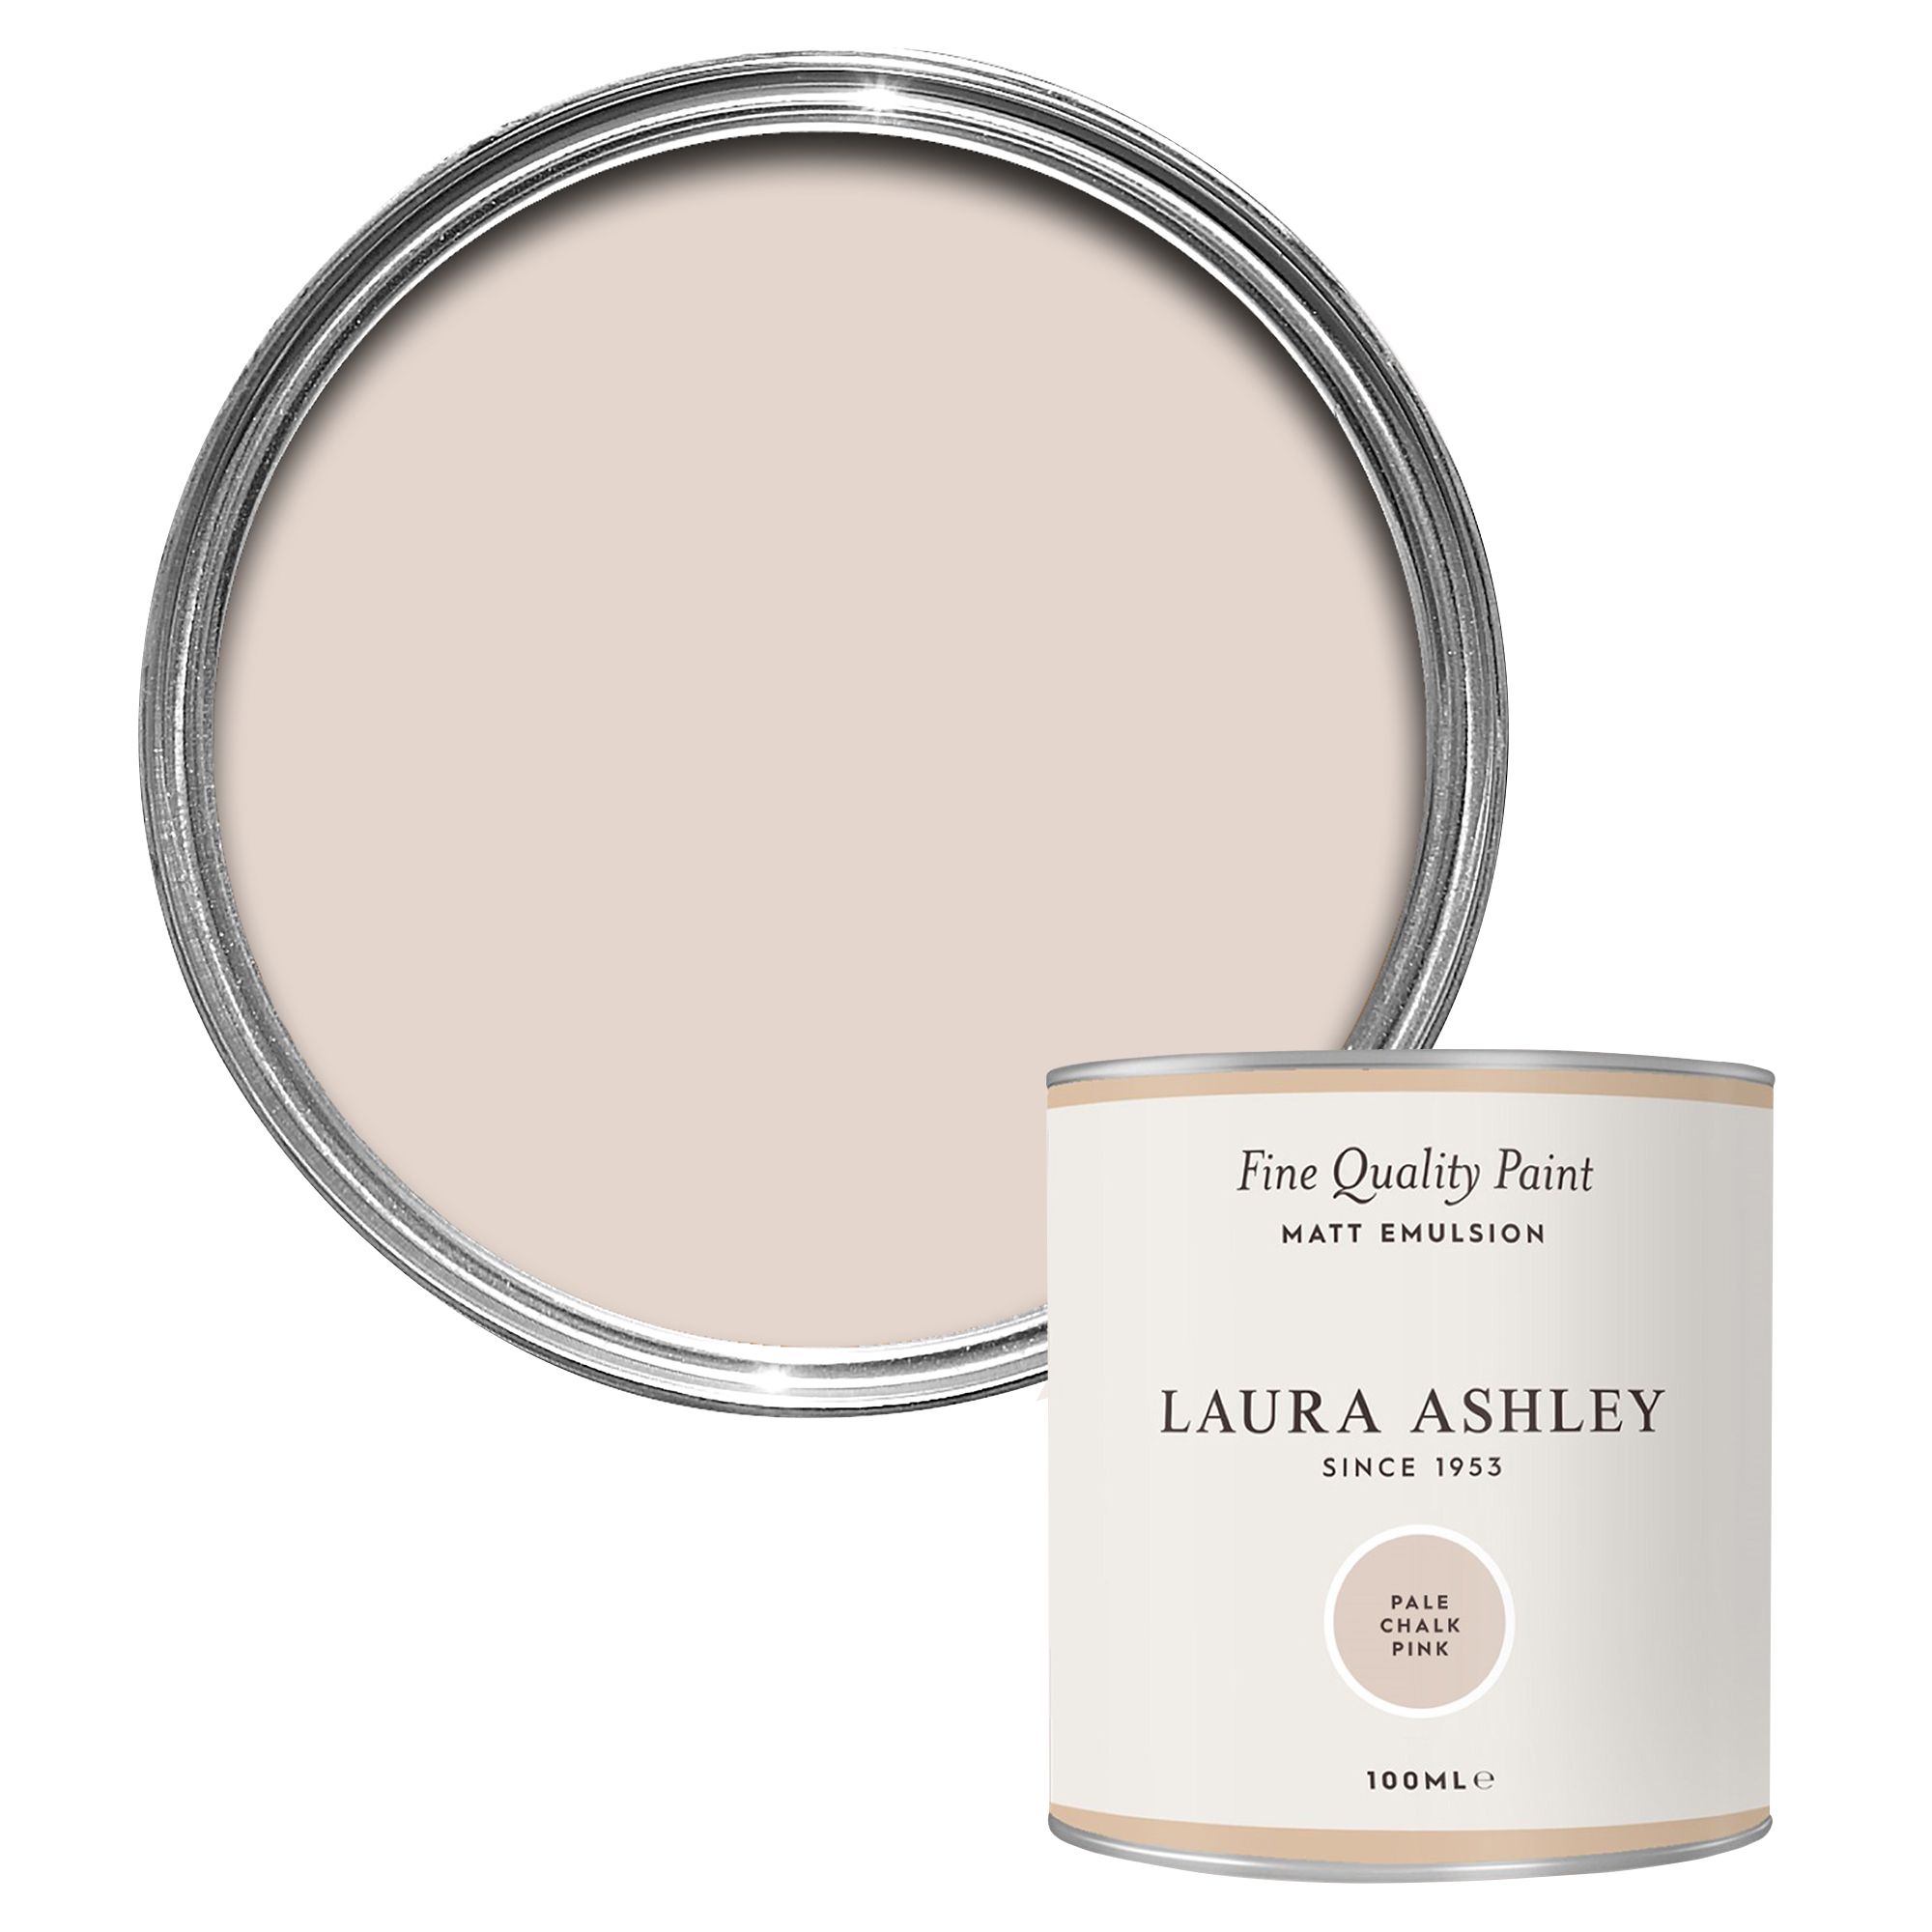 Laura Ashley Pale Chalk Pink Matt Emulsion paint, 100ml